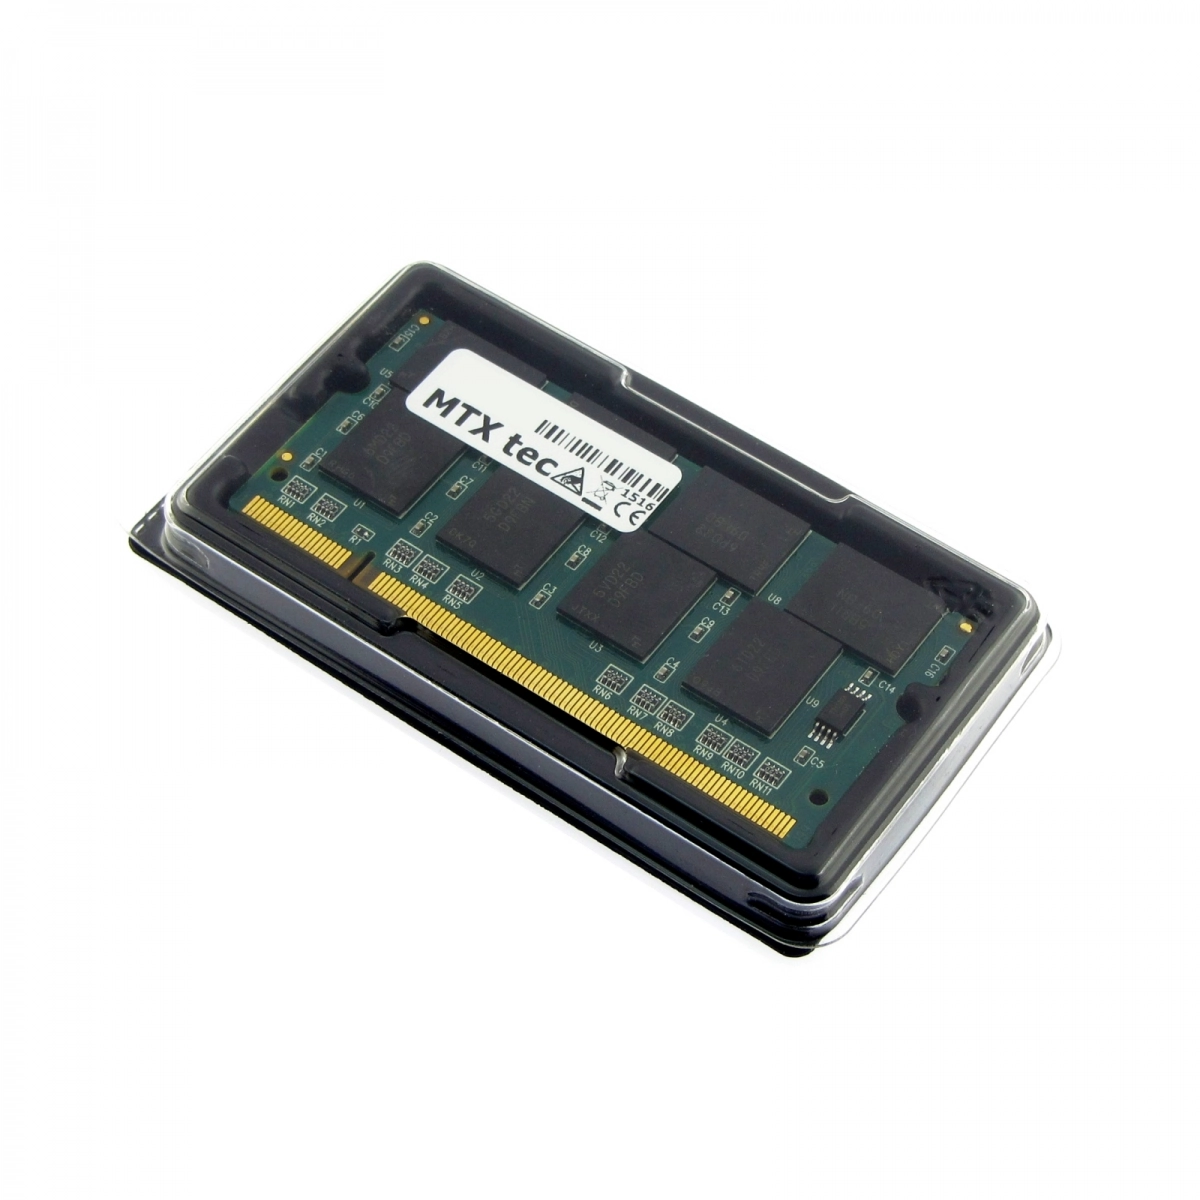 MTXtec Arbeitsspeicher 512 MB RAM für FUJITSU Amilo L-7310W, L7310W